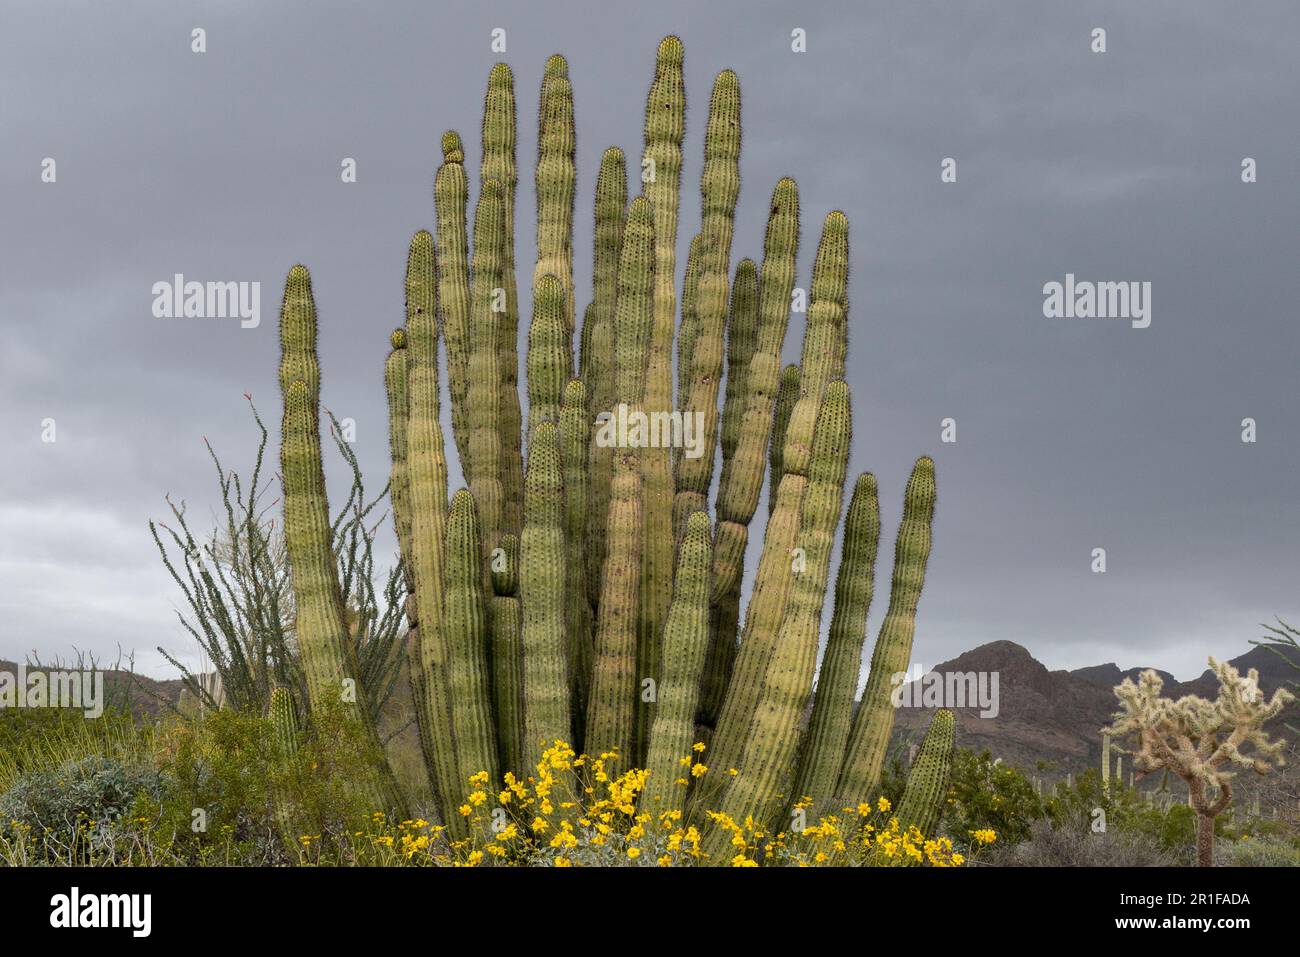 Grand organ Pipe Cactus au Monument National Organ Pipe Cactus, Arizona, États-Unis Banque D'Images